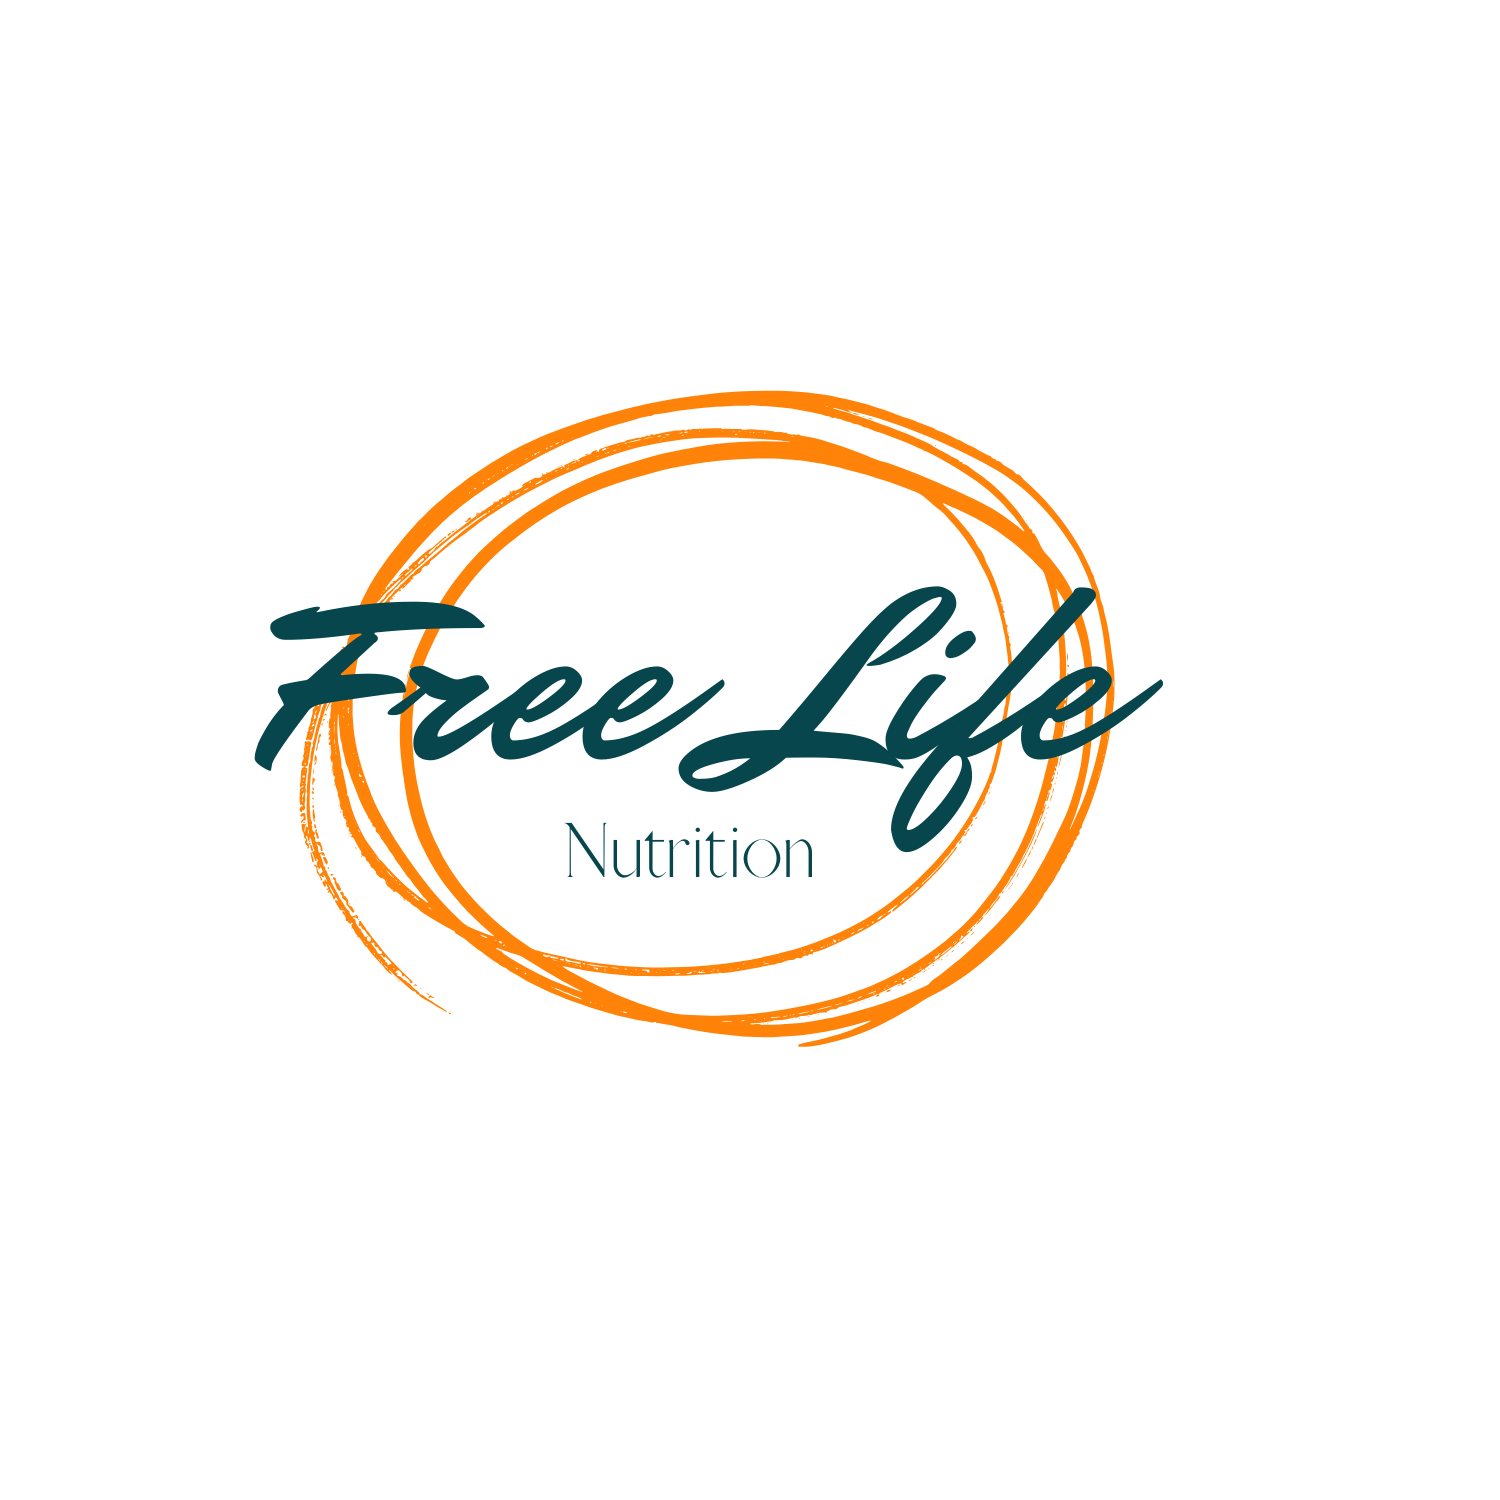 Free Life Nutrition LLC